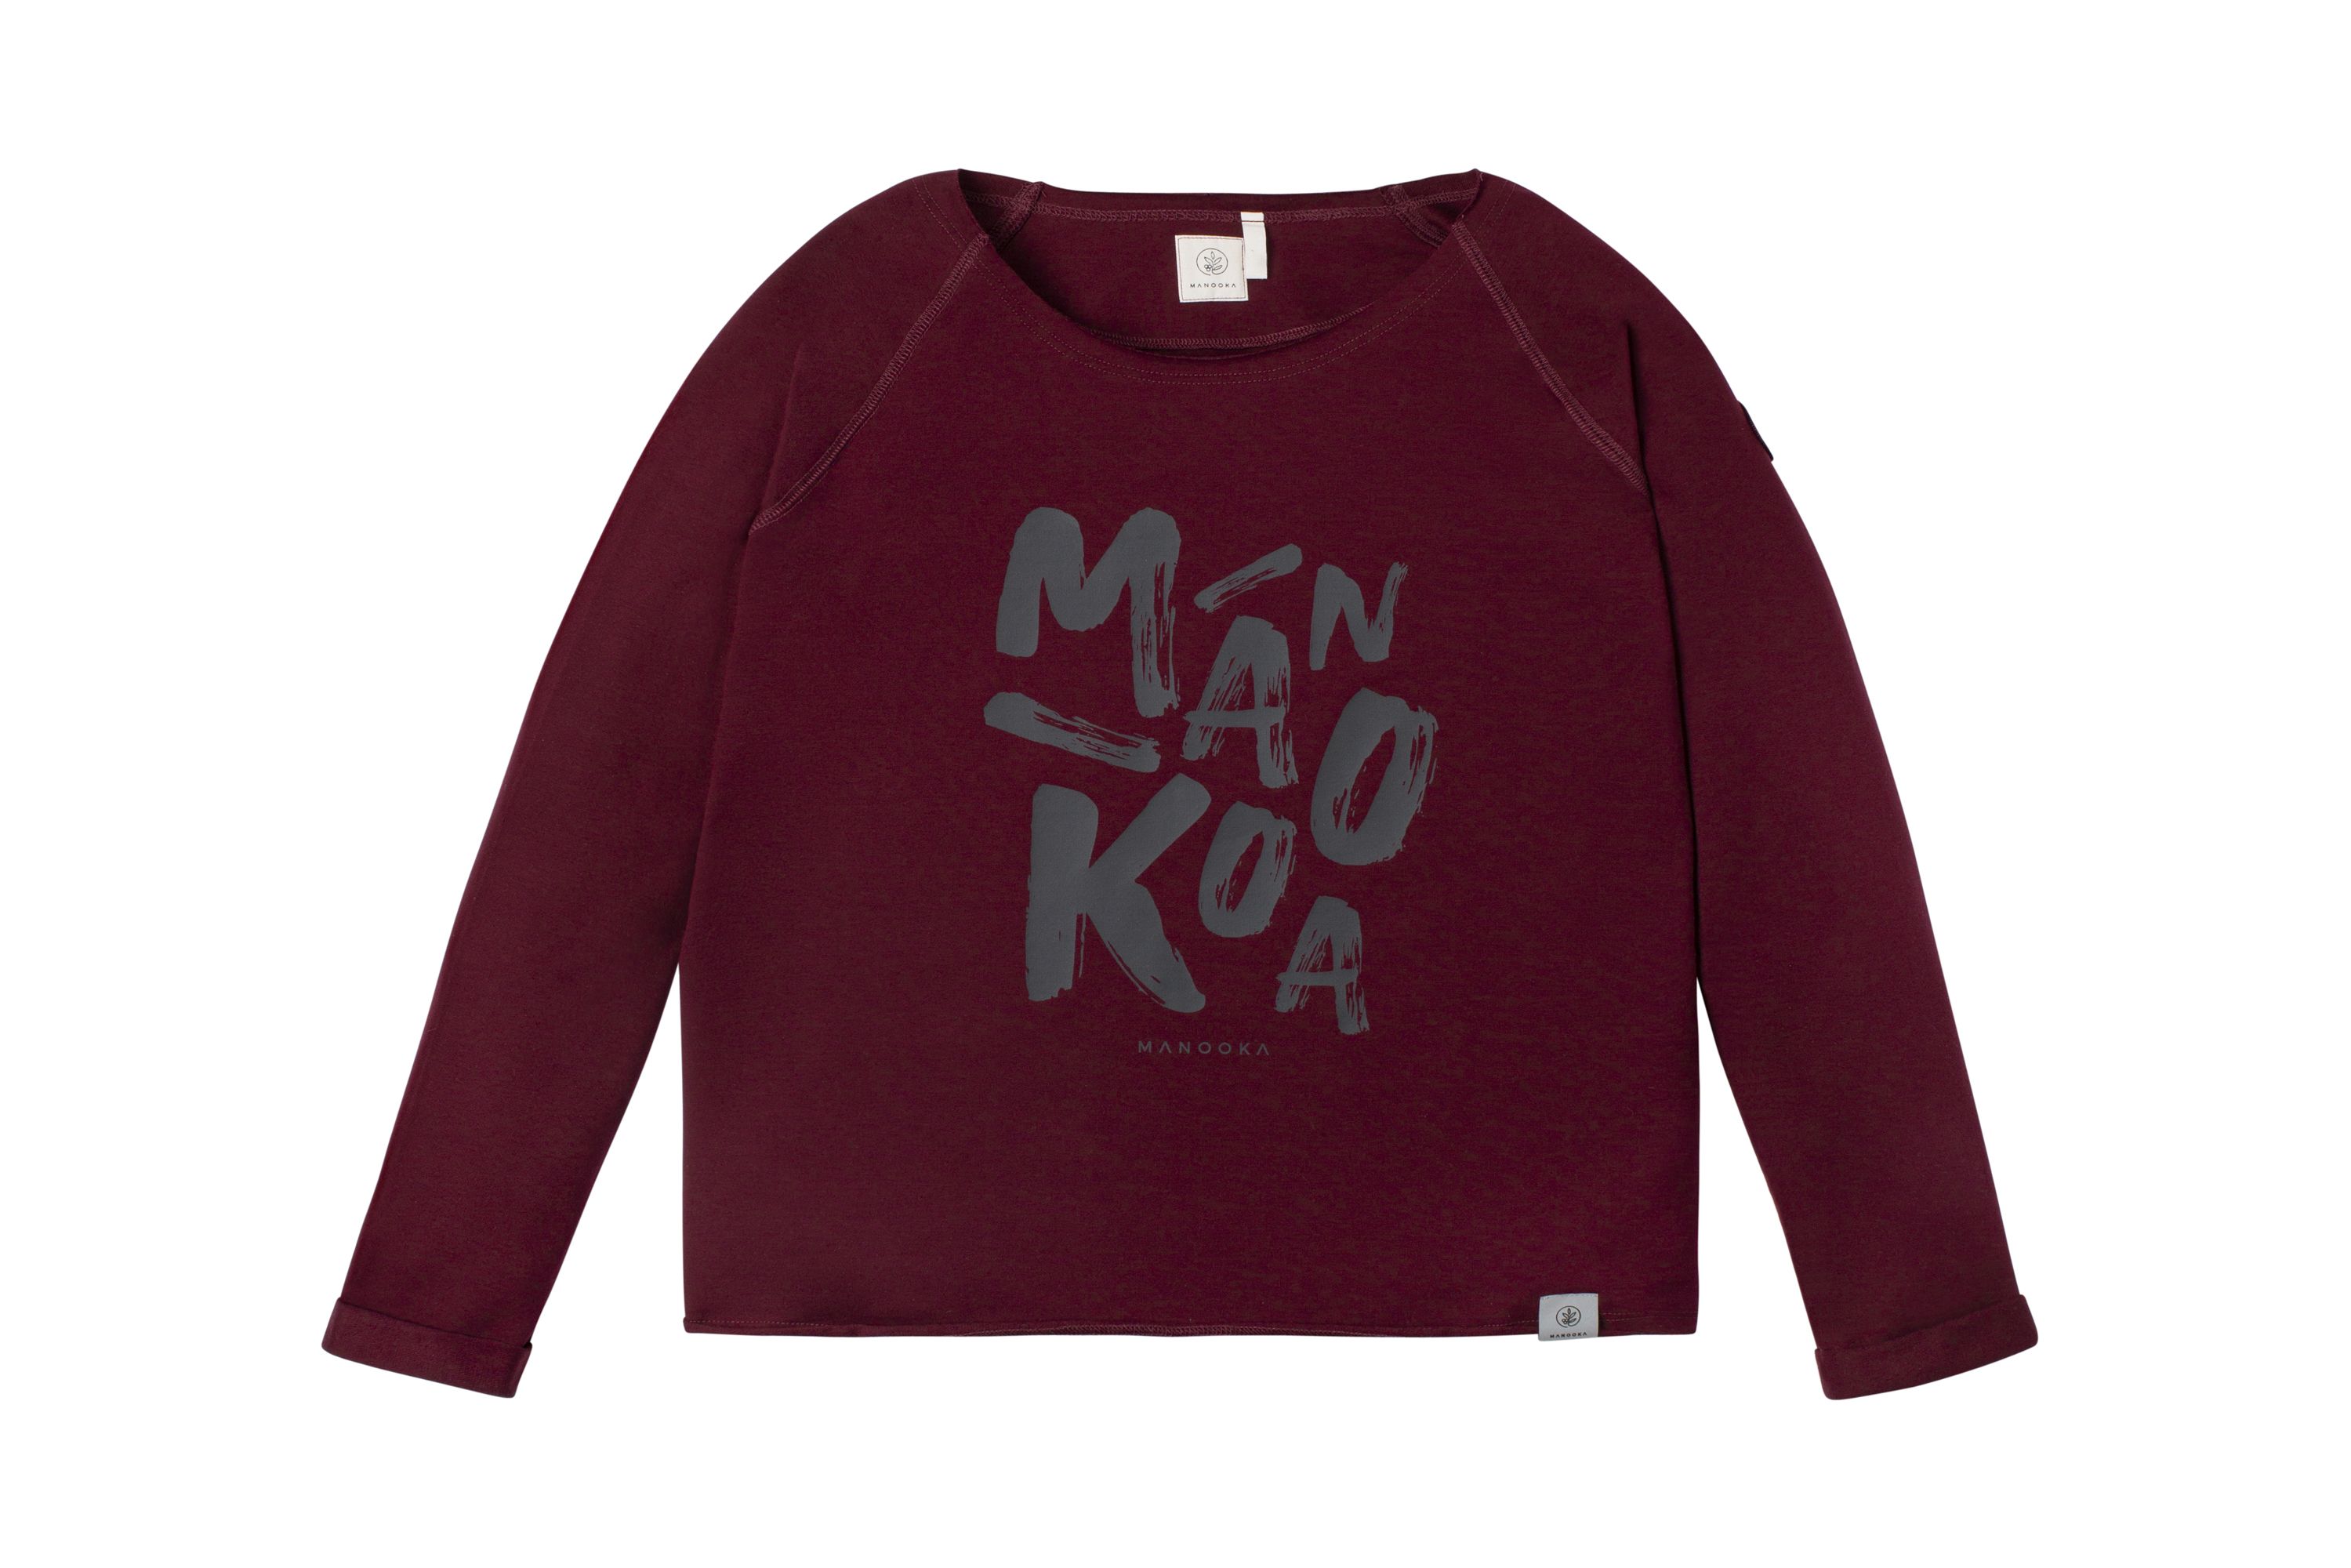 Ein bordeauxfarbenes Nadia-Sweatshirt mit Manooka-Schriftzug